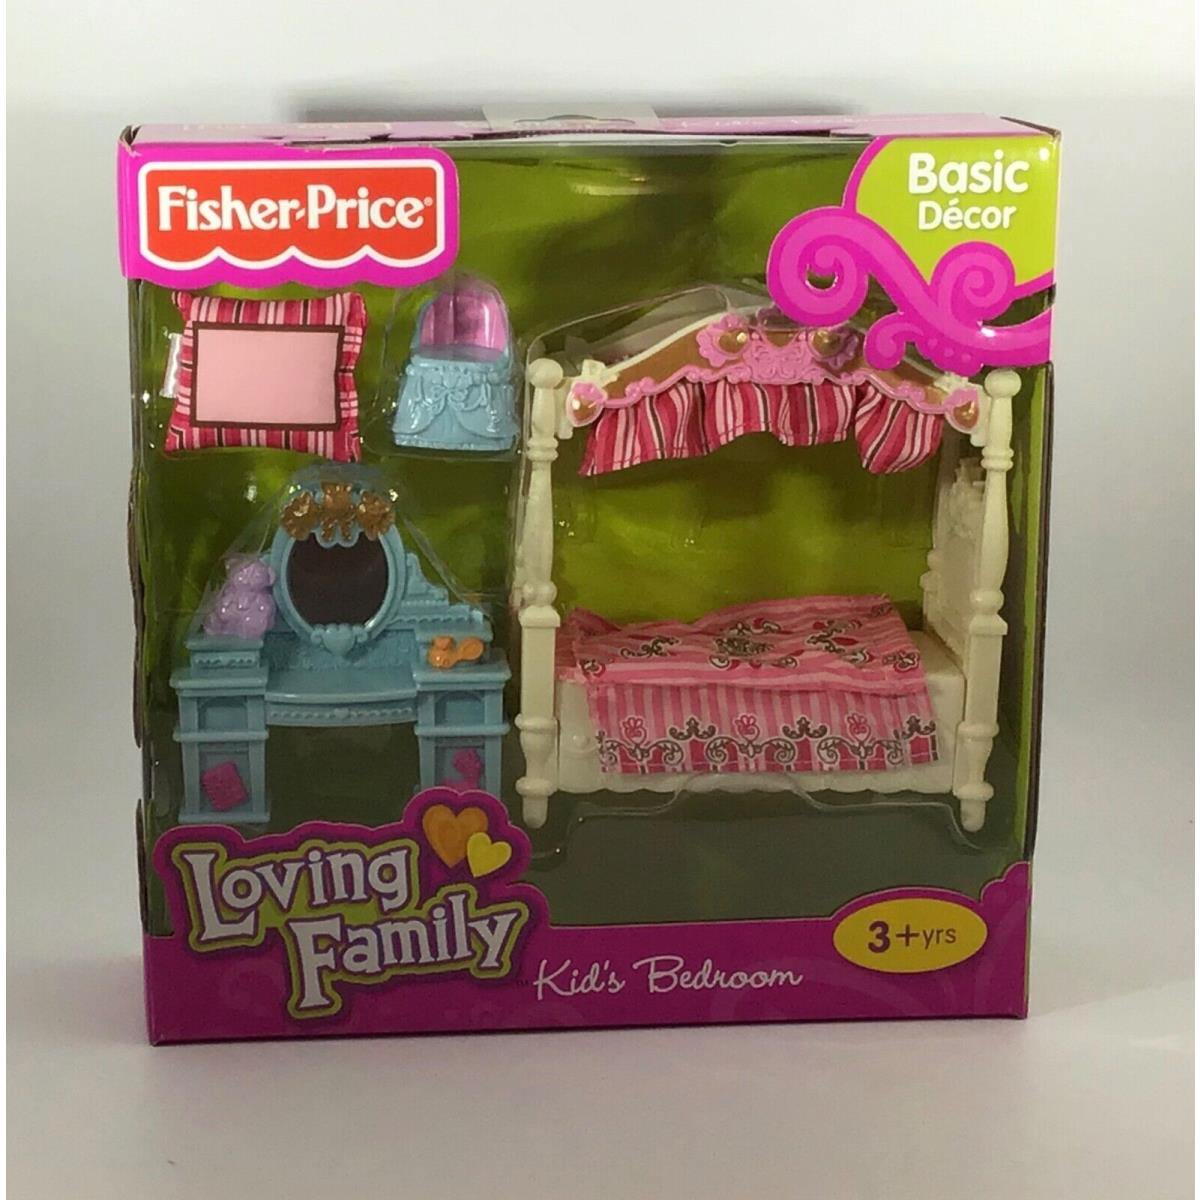 Fisher-price Loving Family Kids Bedroom Basic Decor R6068